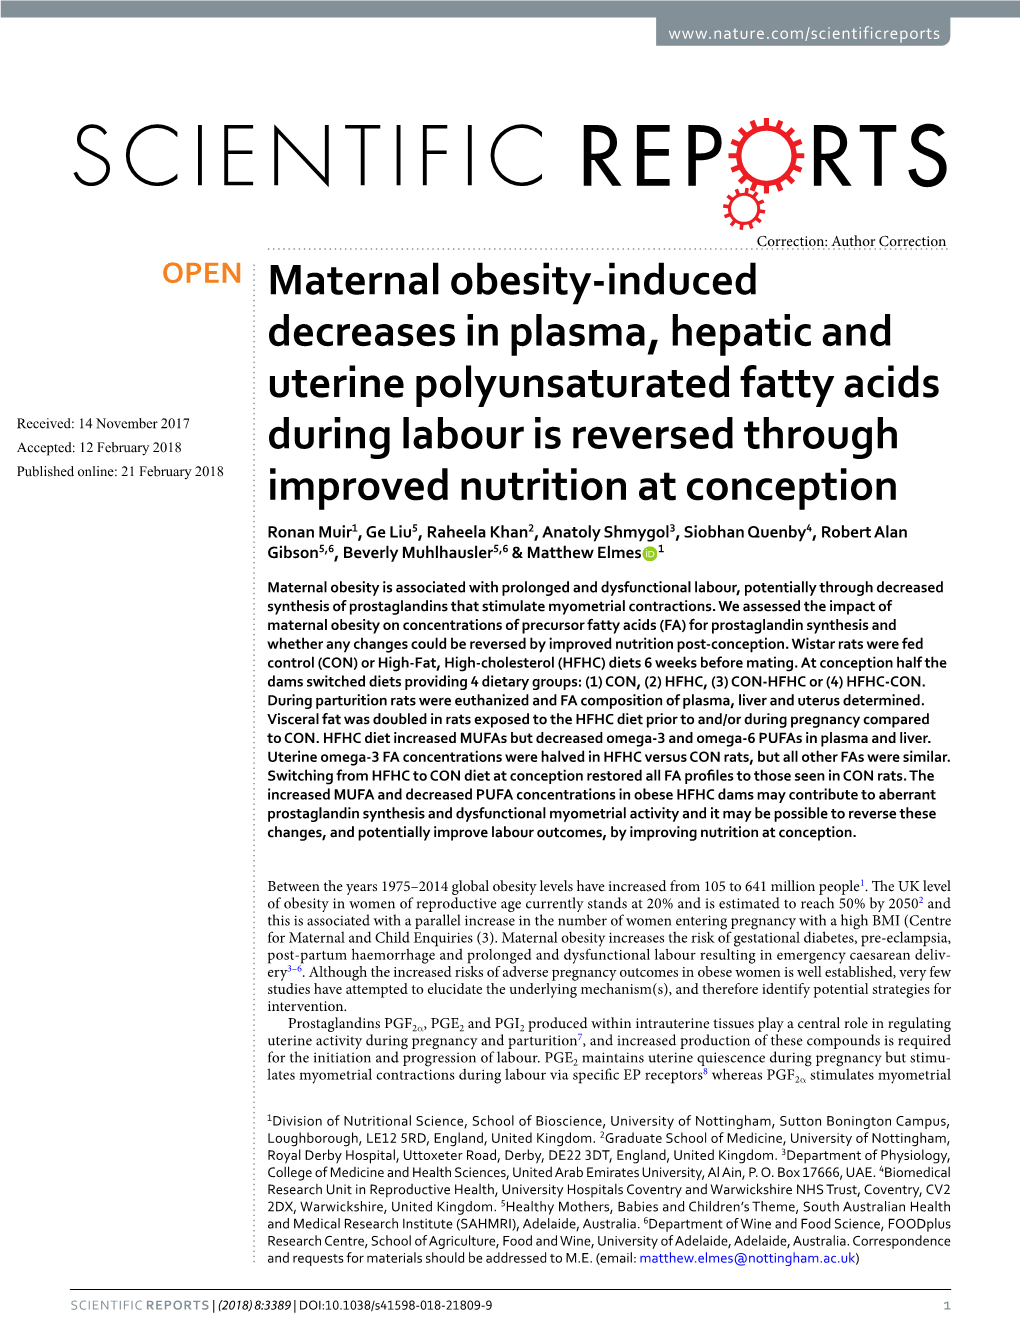 Maternal Obesity-Induced Decreases in Plasma, Hepatic and Uterine